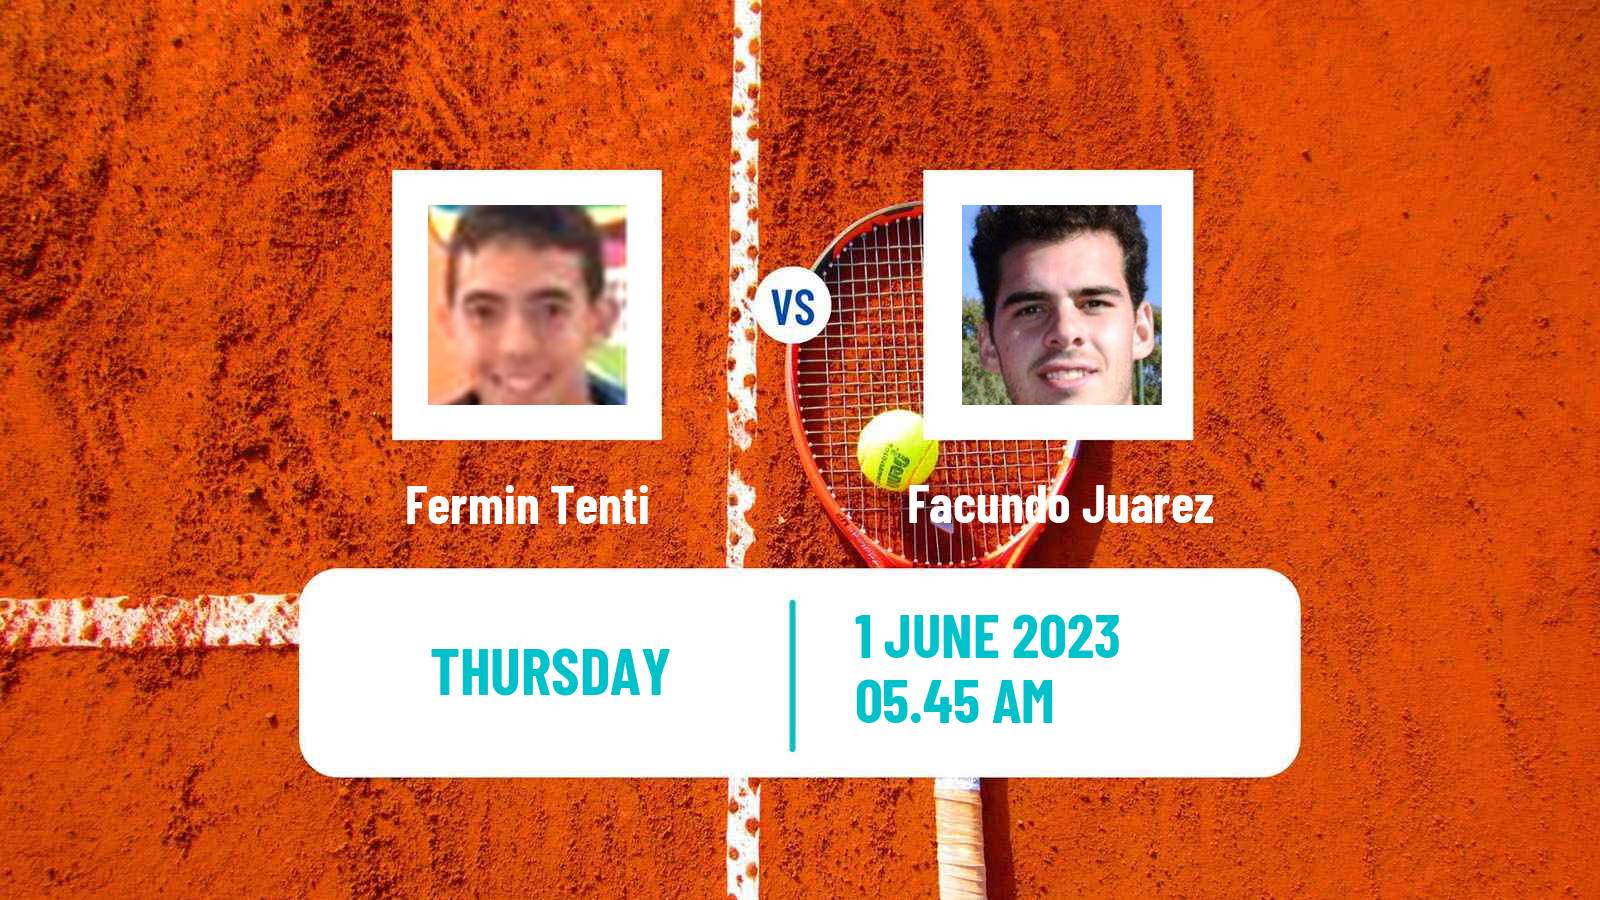 Tennis ITF M25 La Nucia Men Fermin Tenti - Facundo Juarez